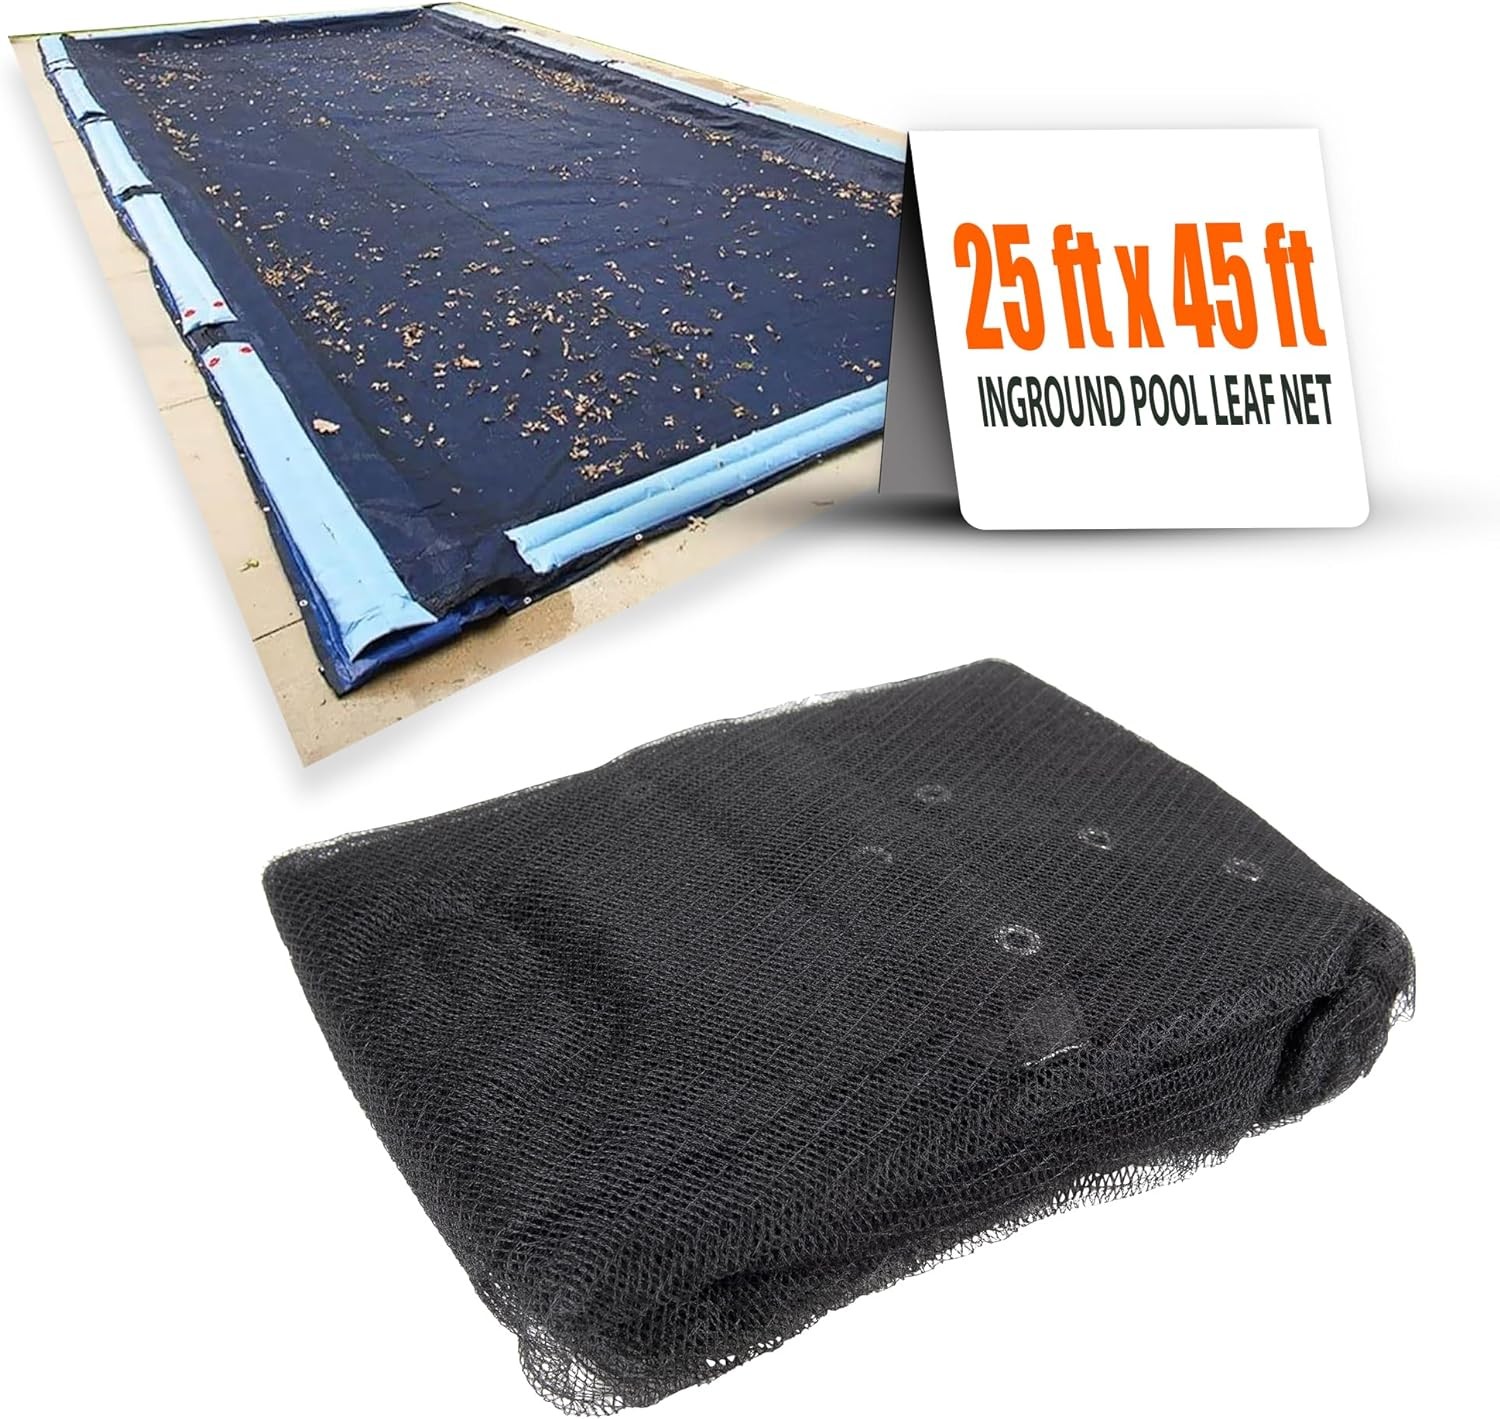 SET Sunsolar Energy Technologies Leaf Net Cover for 25 ft x 45 ft Rectangular Inground Swimming Pool with Extra 4 ft Overlap